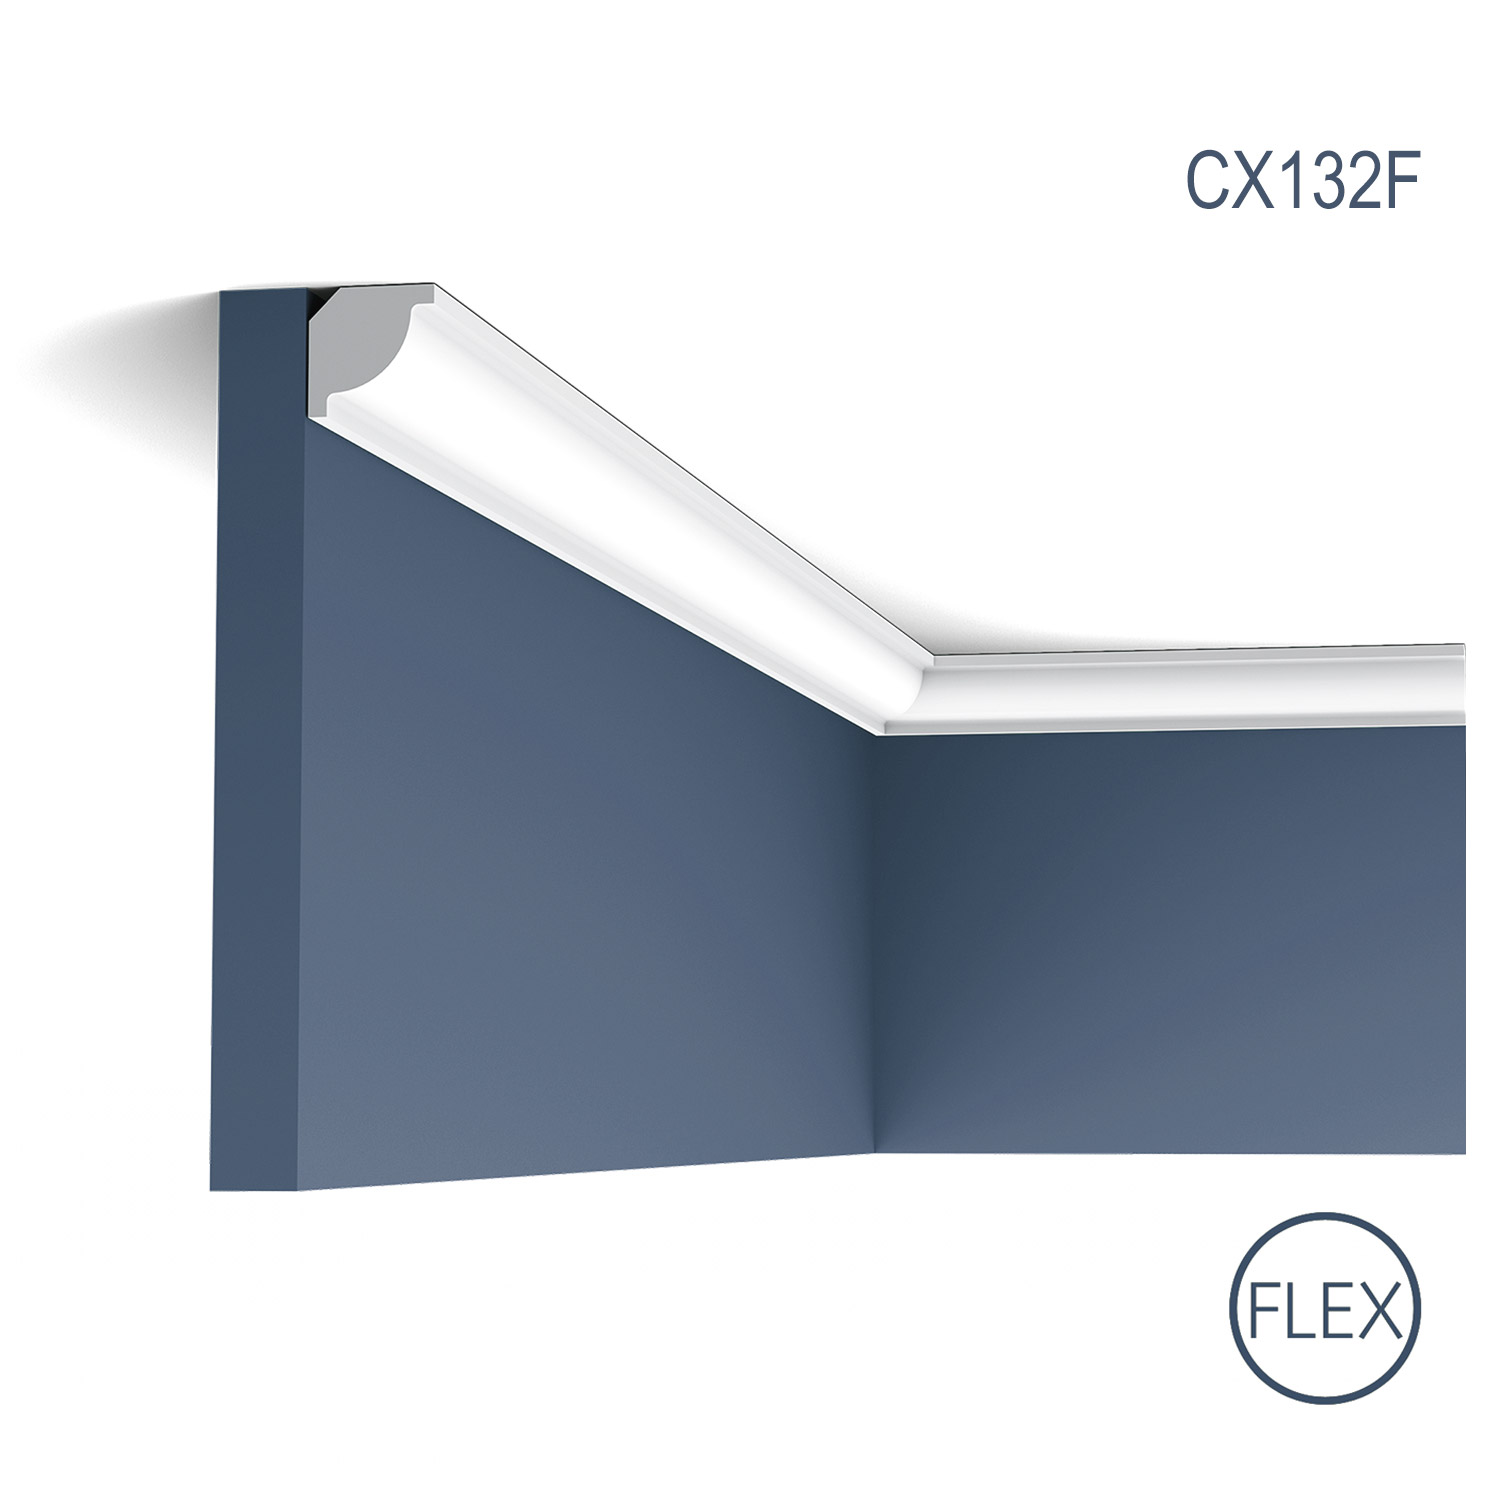 Cornisa Flex Axxent CX132F, Dimensiuni: 200 X 2 X 2 cm, Orac Decor